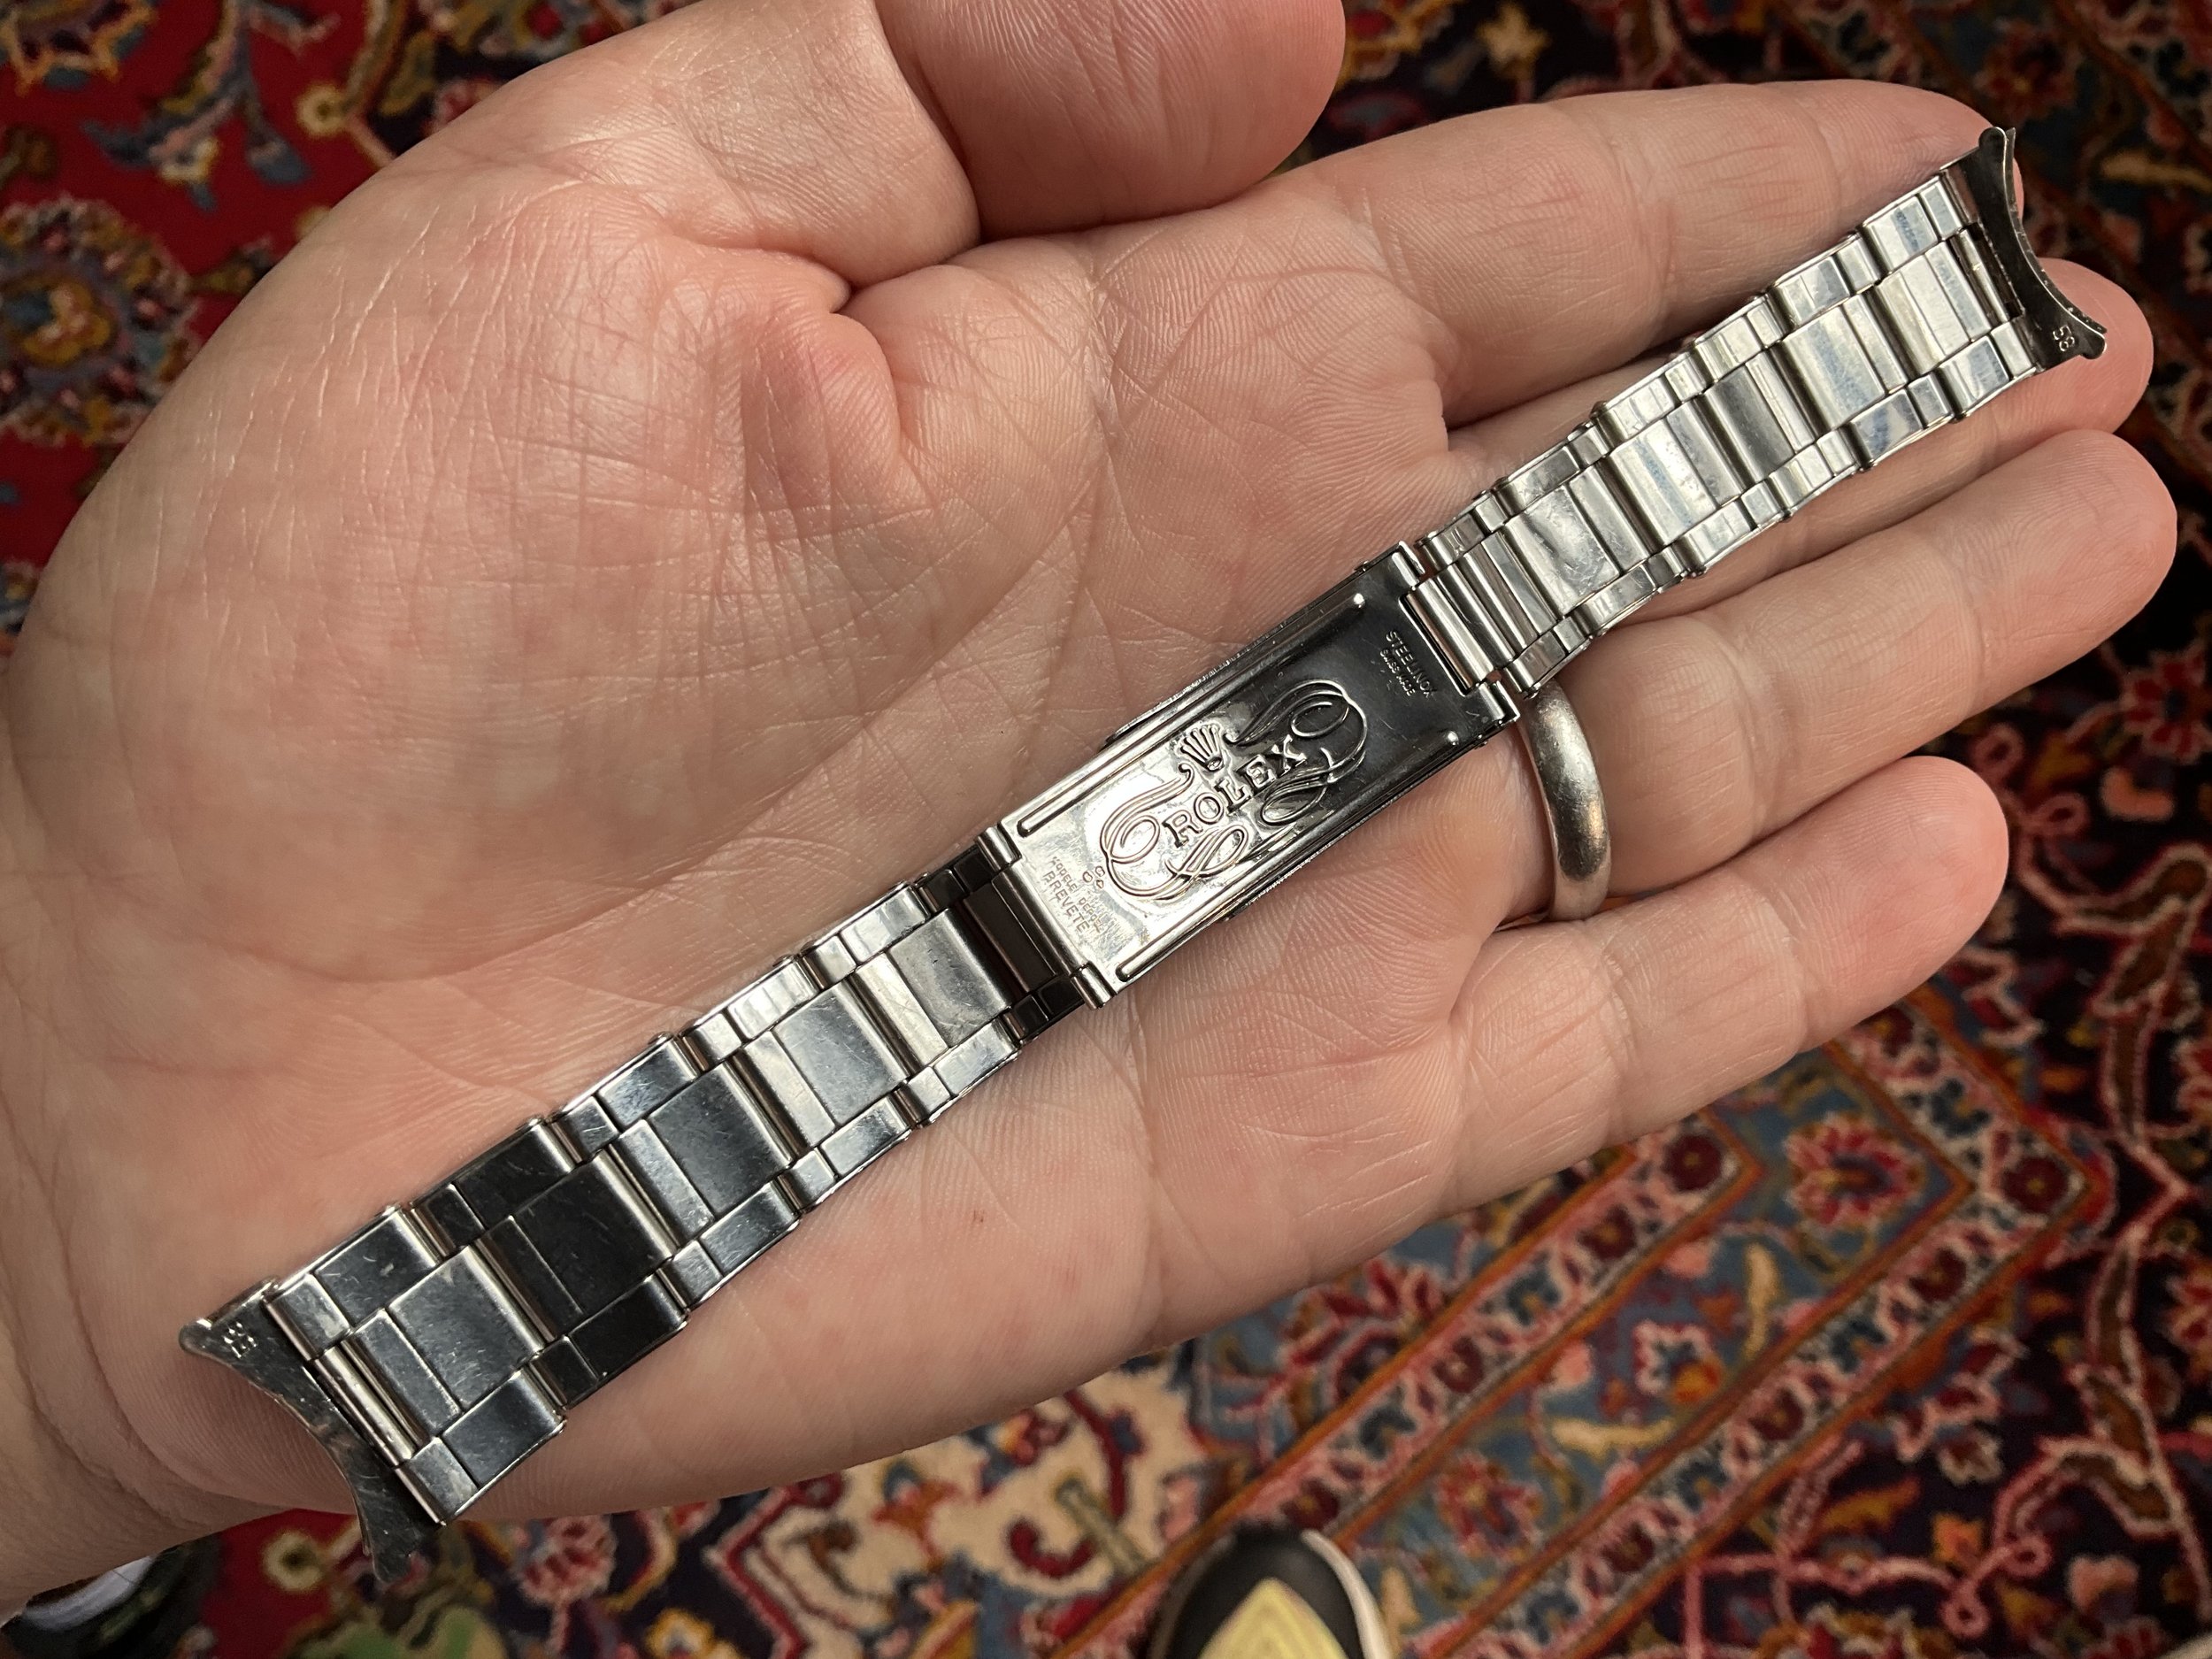 Gents Rolex style bracelet | Eternity Diamonds